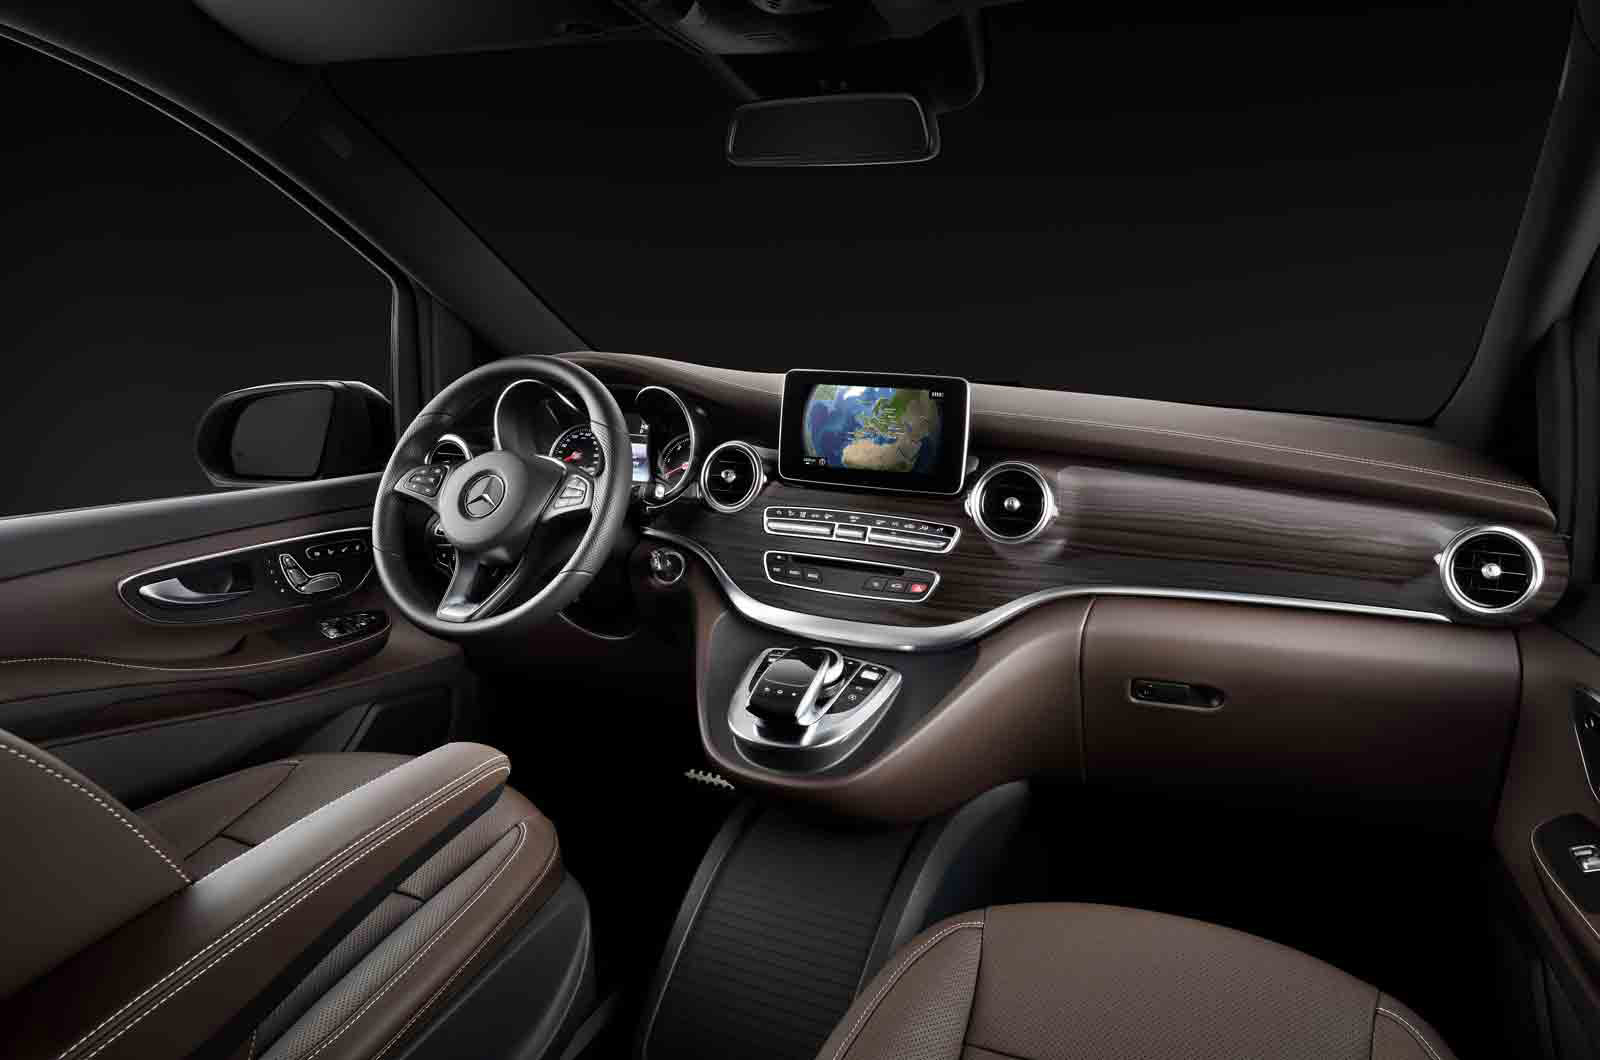 Mercedes Benz Shows Interior Of New V Class